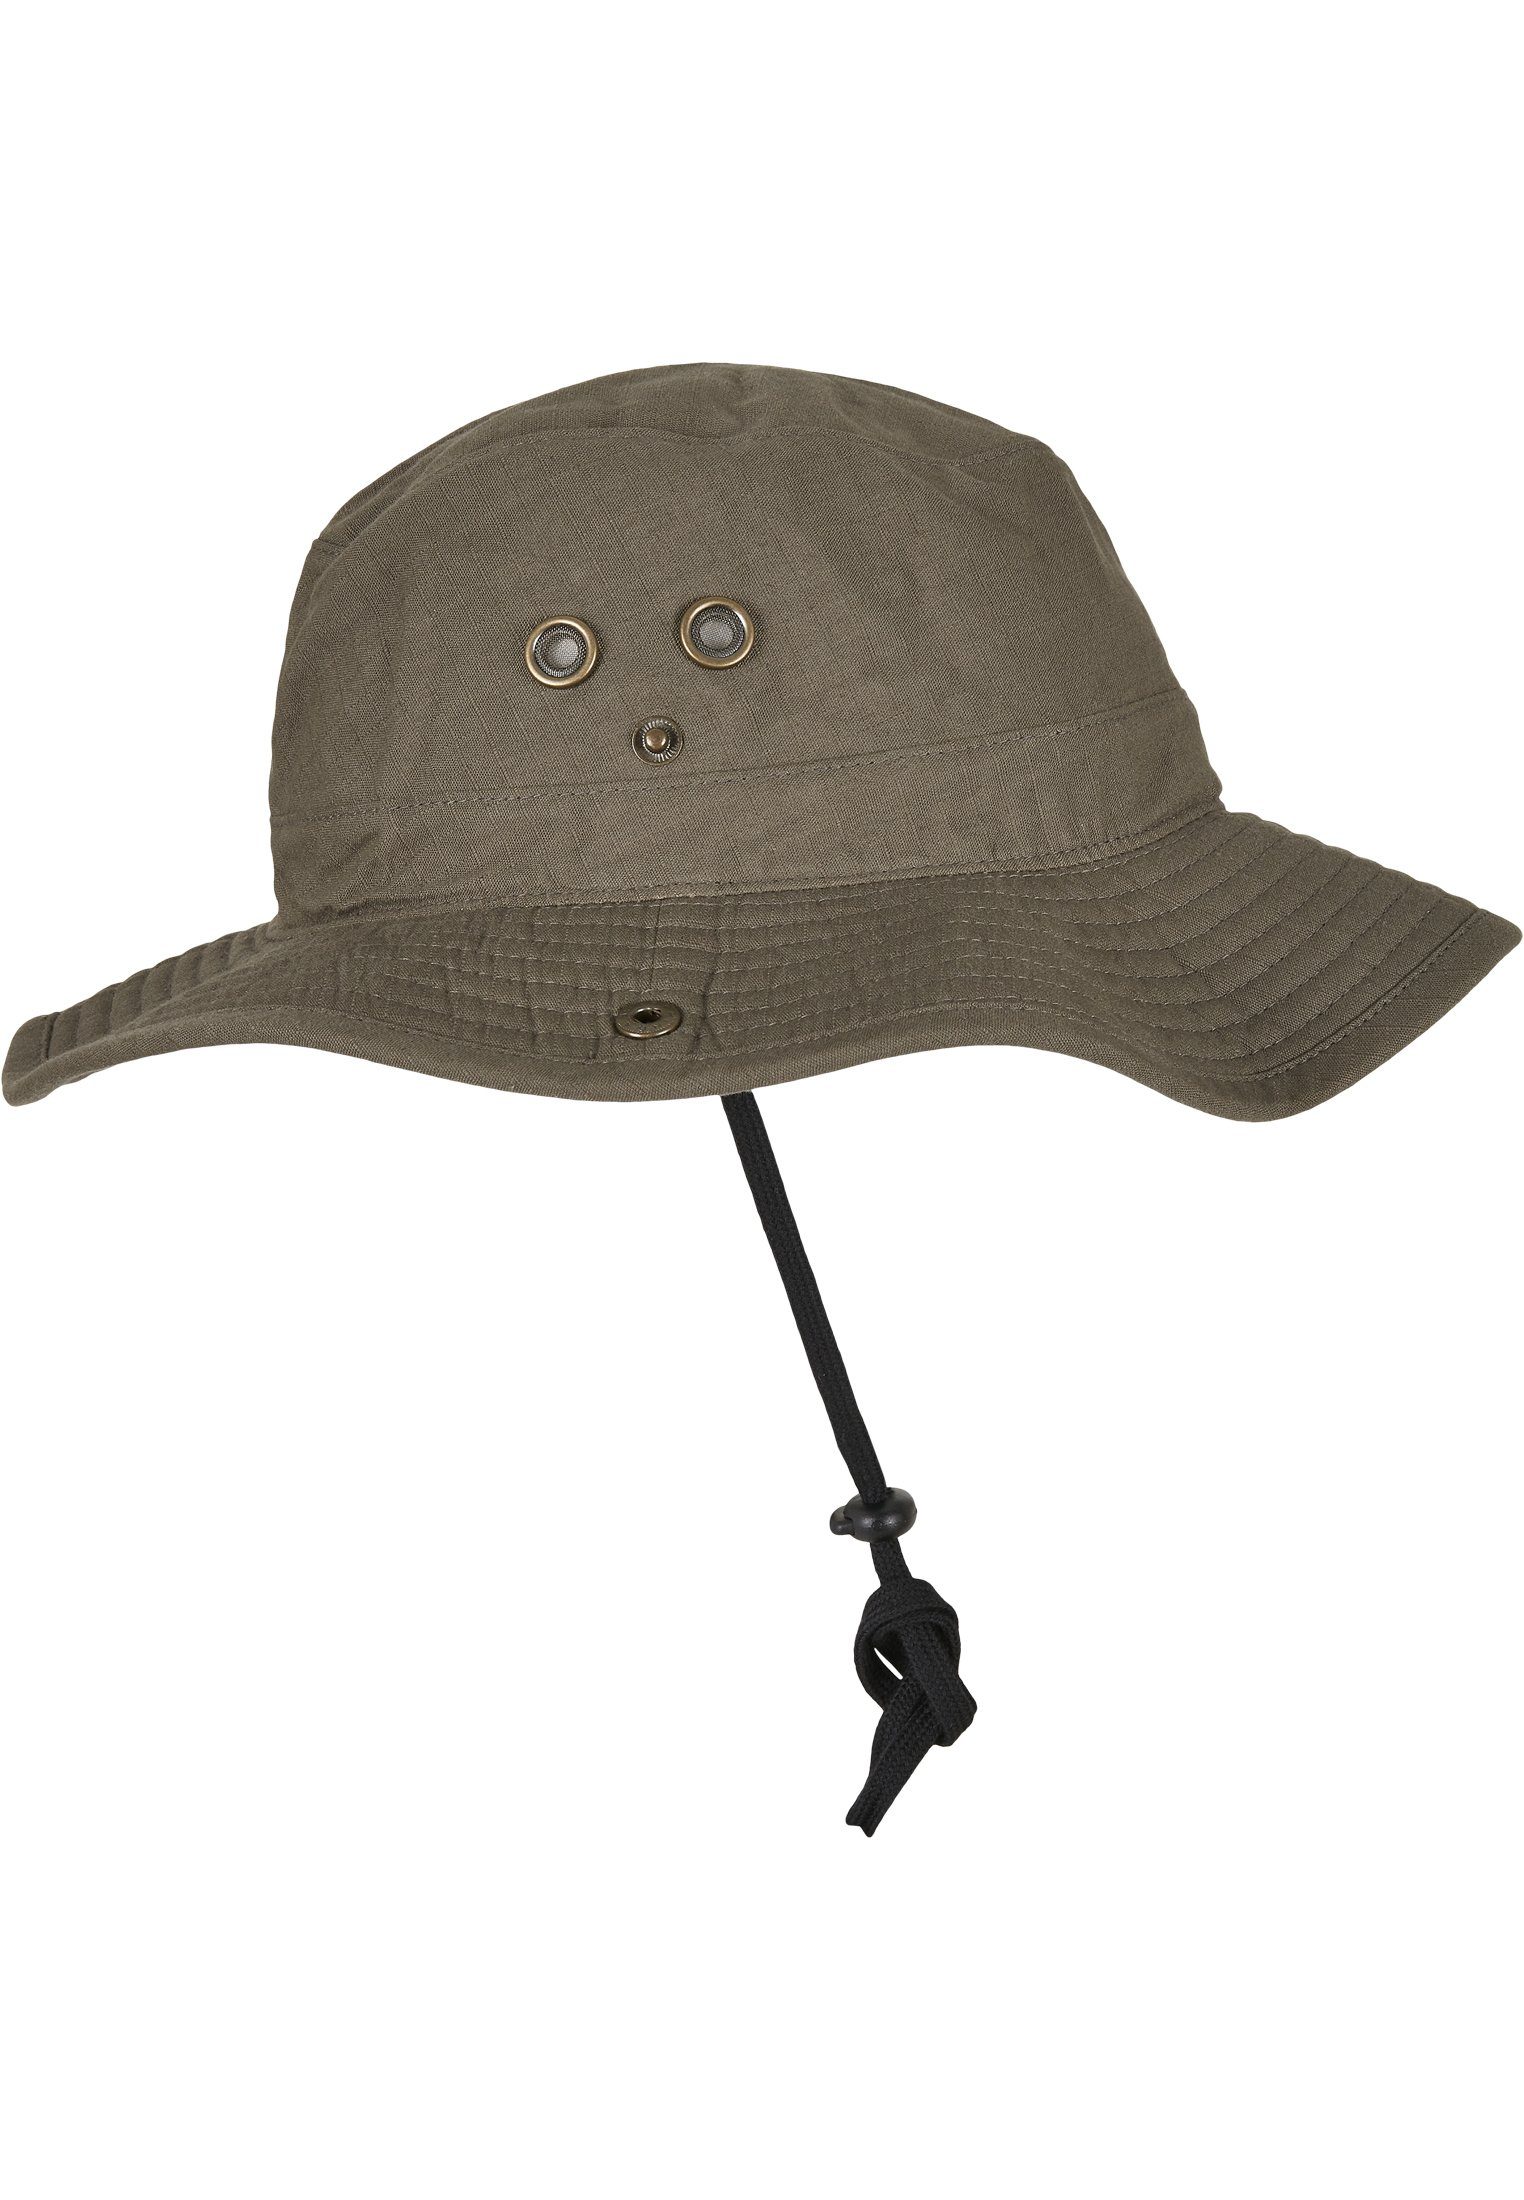 Flex Hat Flexfit darkolive Cap Angler